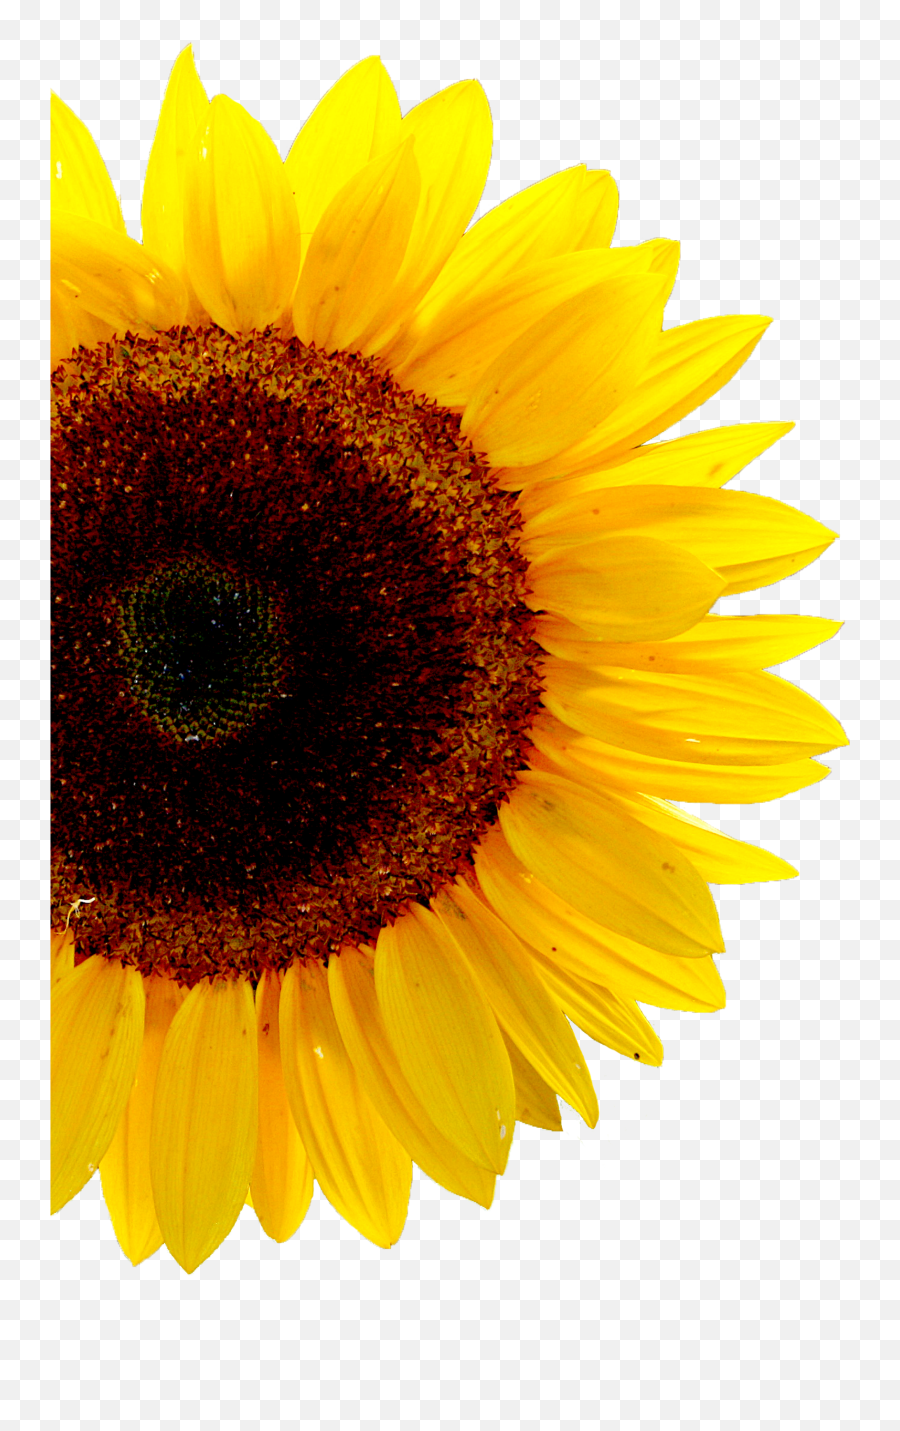 Casetify - Sunflower Transparent Background Png,Sunflower Transparent Background